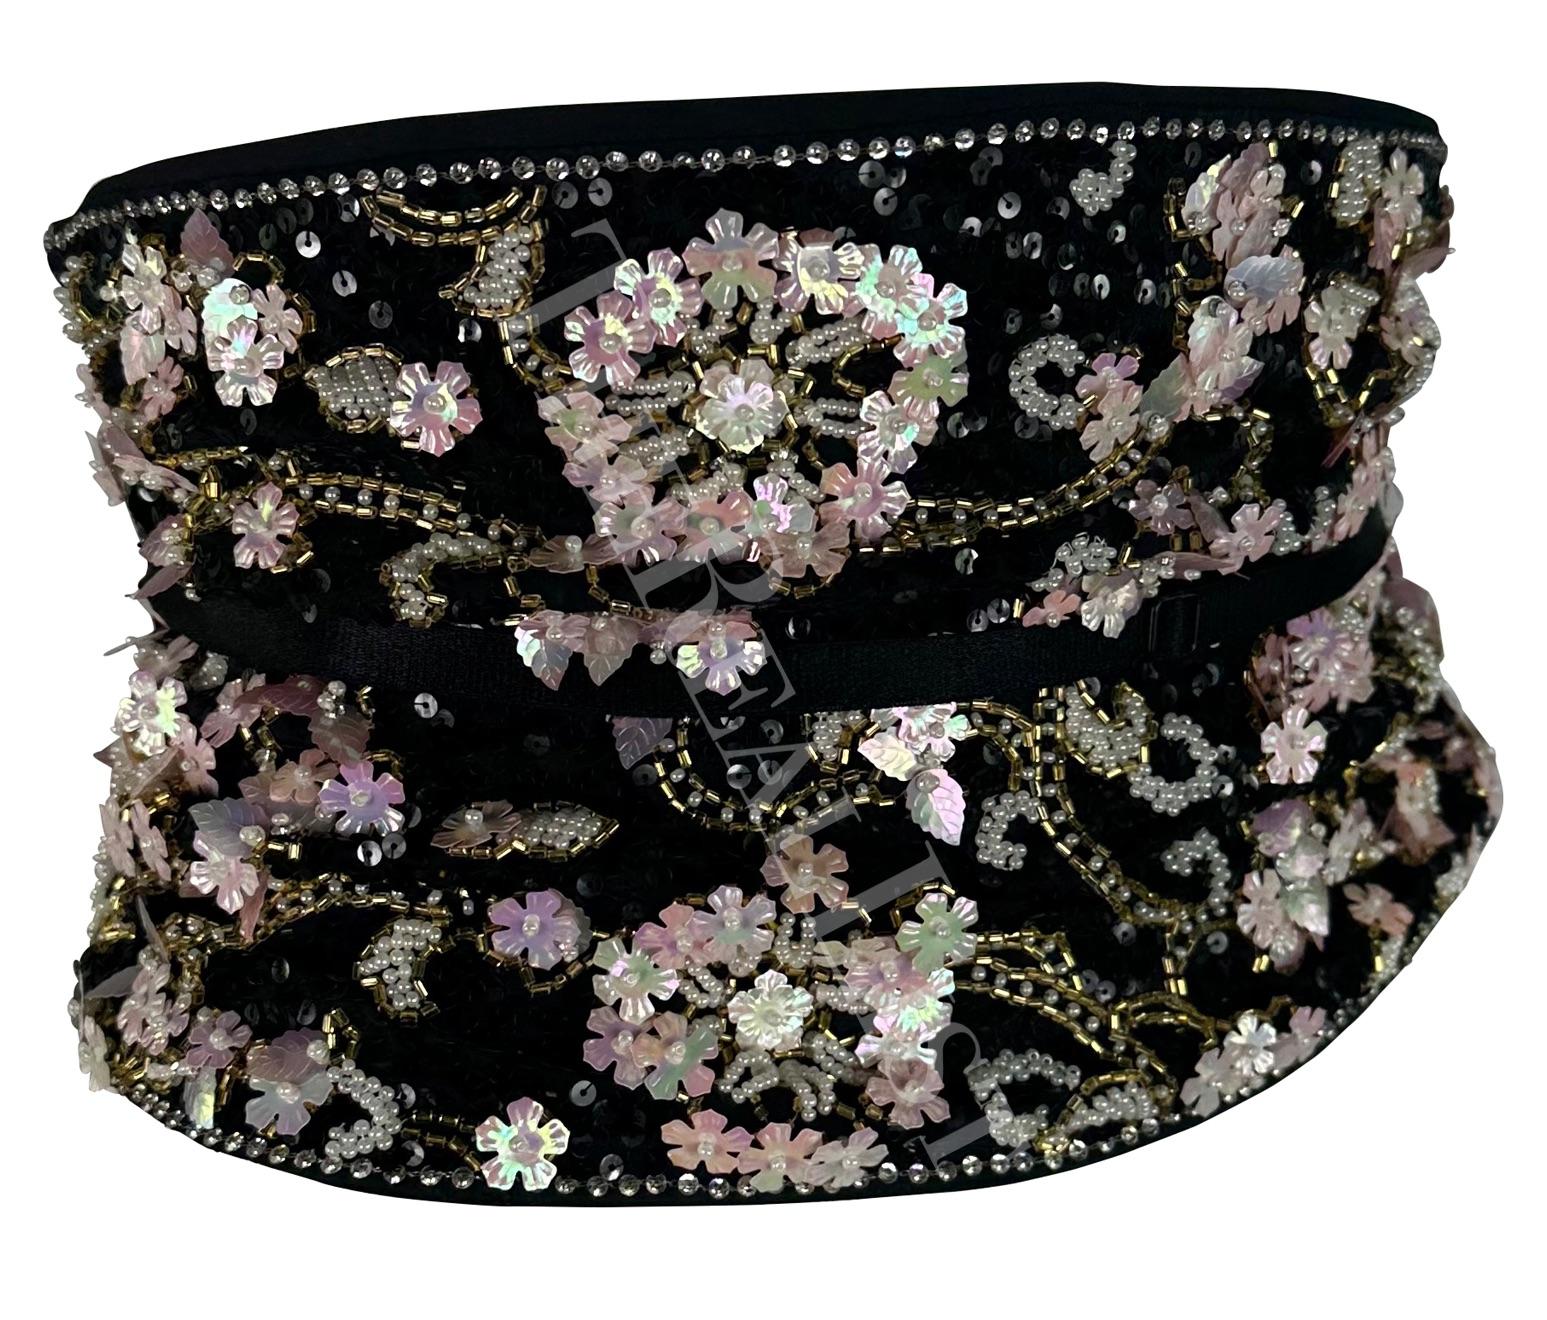 S/S 1999 Dolce & Gabbana Runway Floral Beaded Corset Boned Obi Wrap Waist Belt For Sale 4